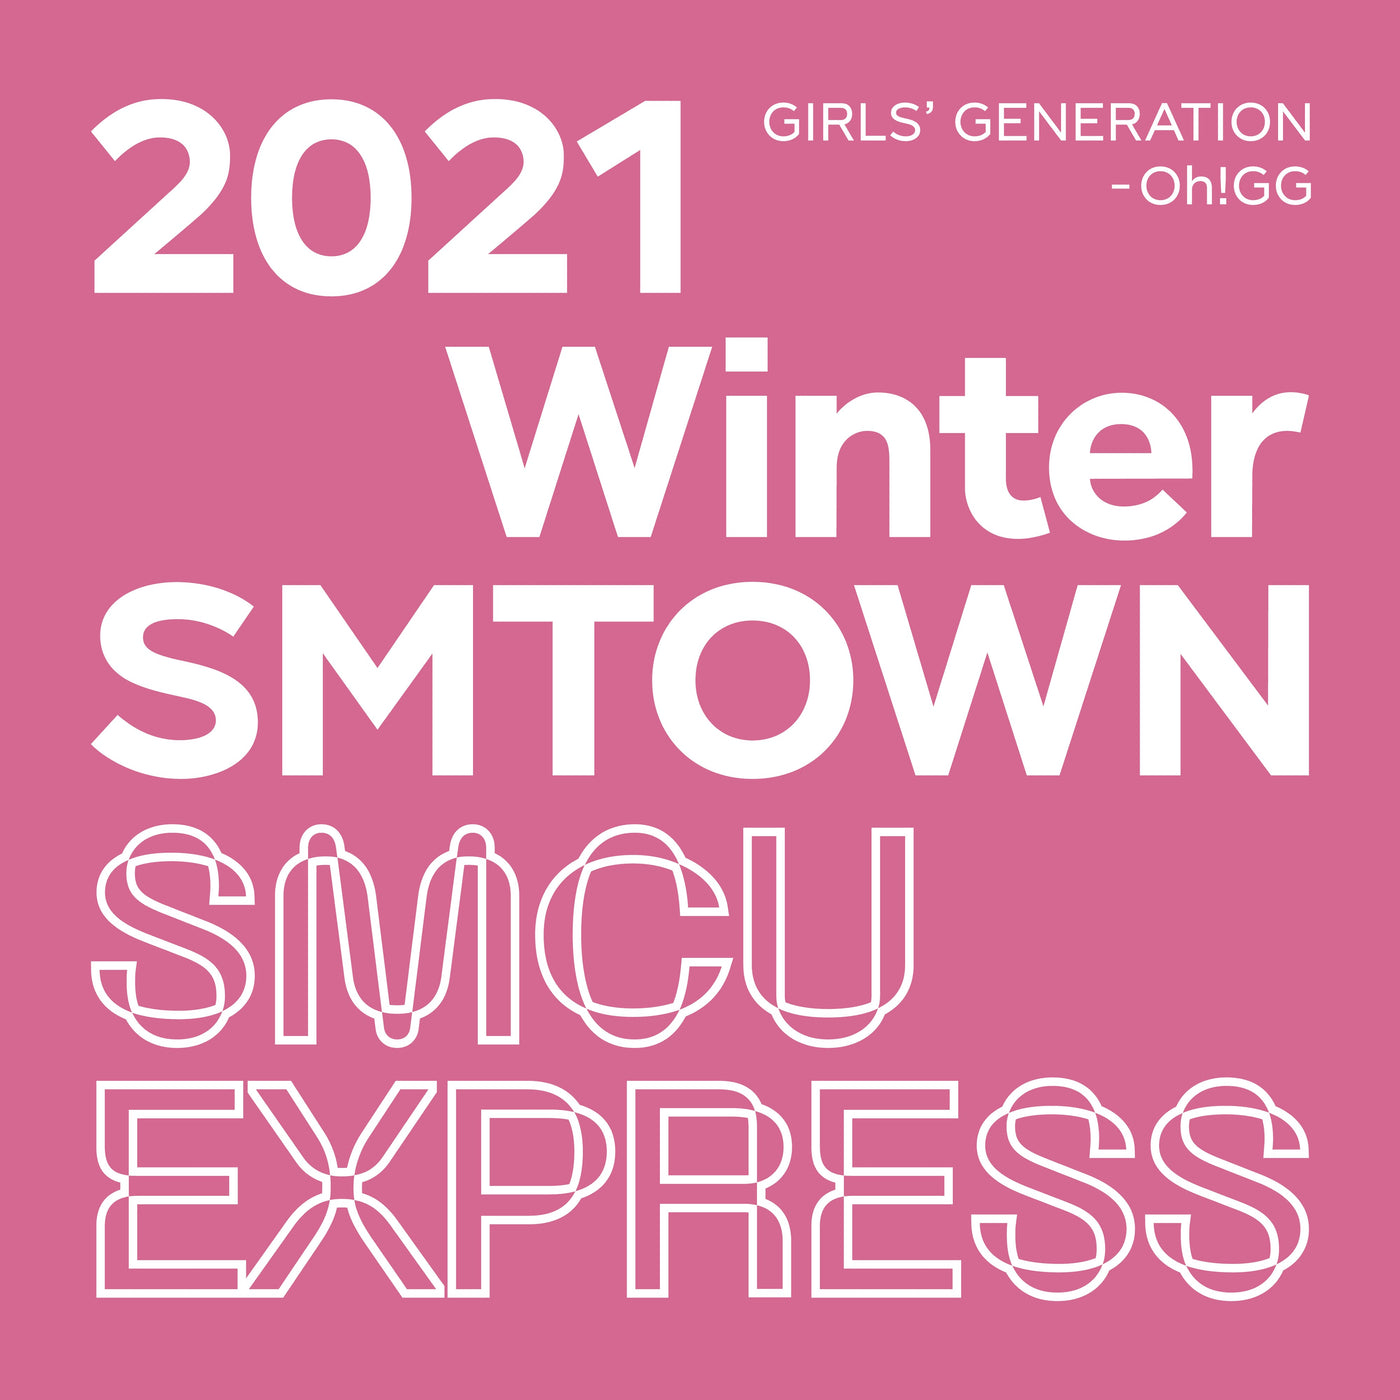 GIRLS' GENERATION - Oh!GG 2021 Winter SMTOWN : SMCU EXPRESS 🇰🇷